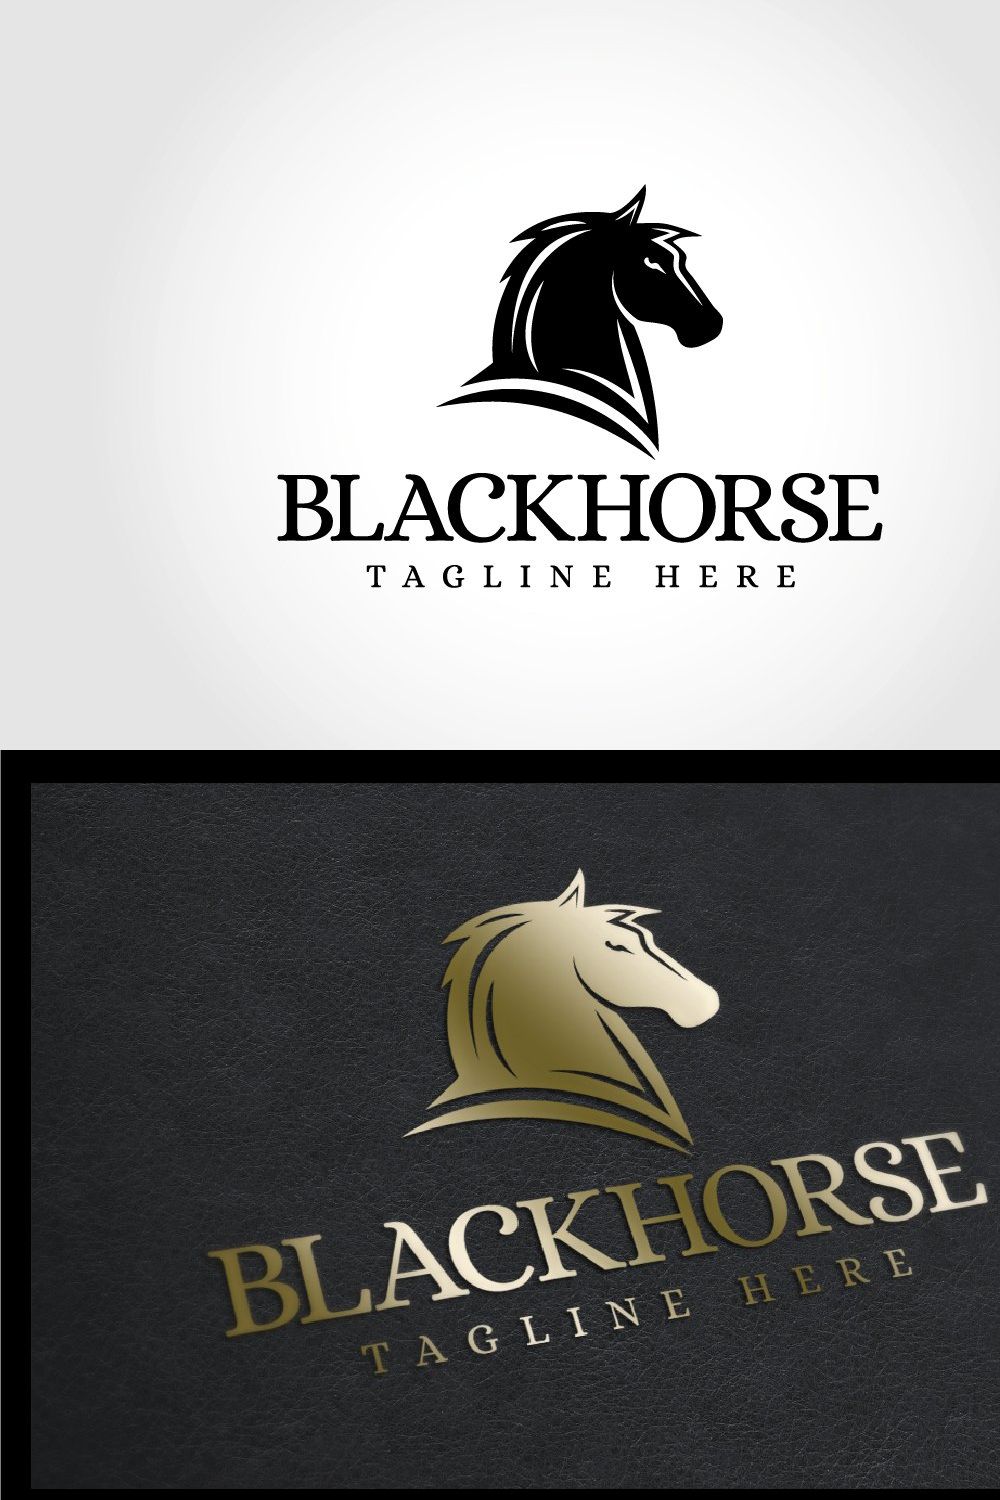 Black Horse pinterest preview image.